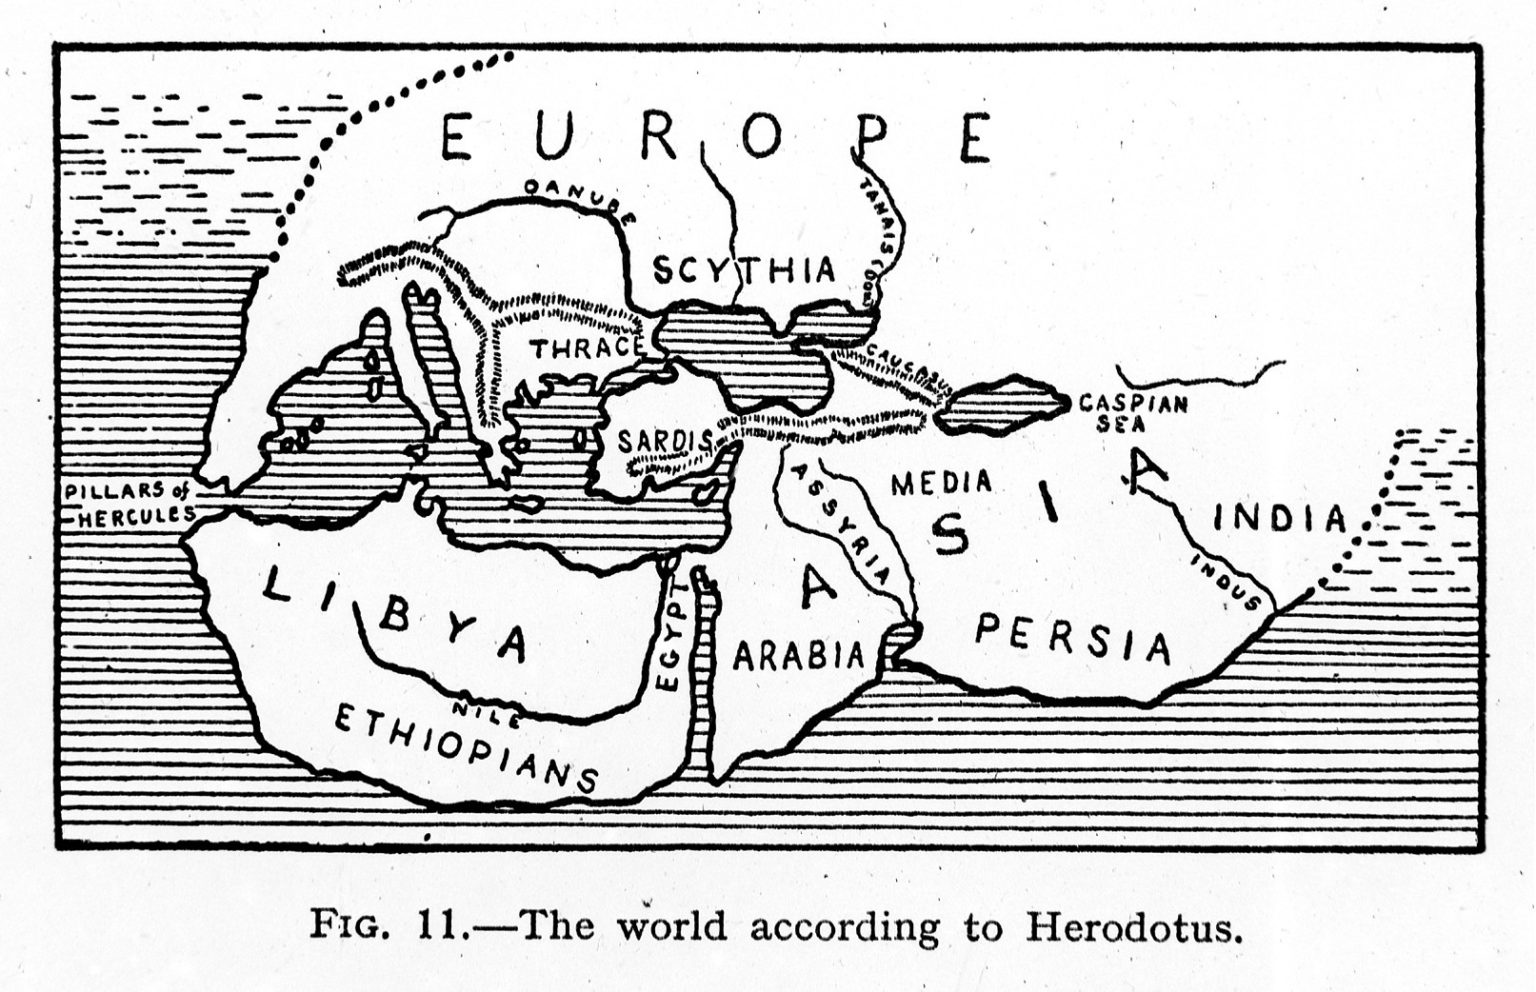 Herodotus-1536x992.jpg